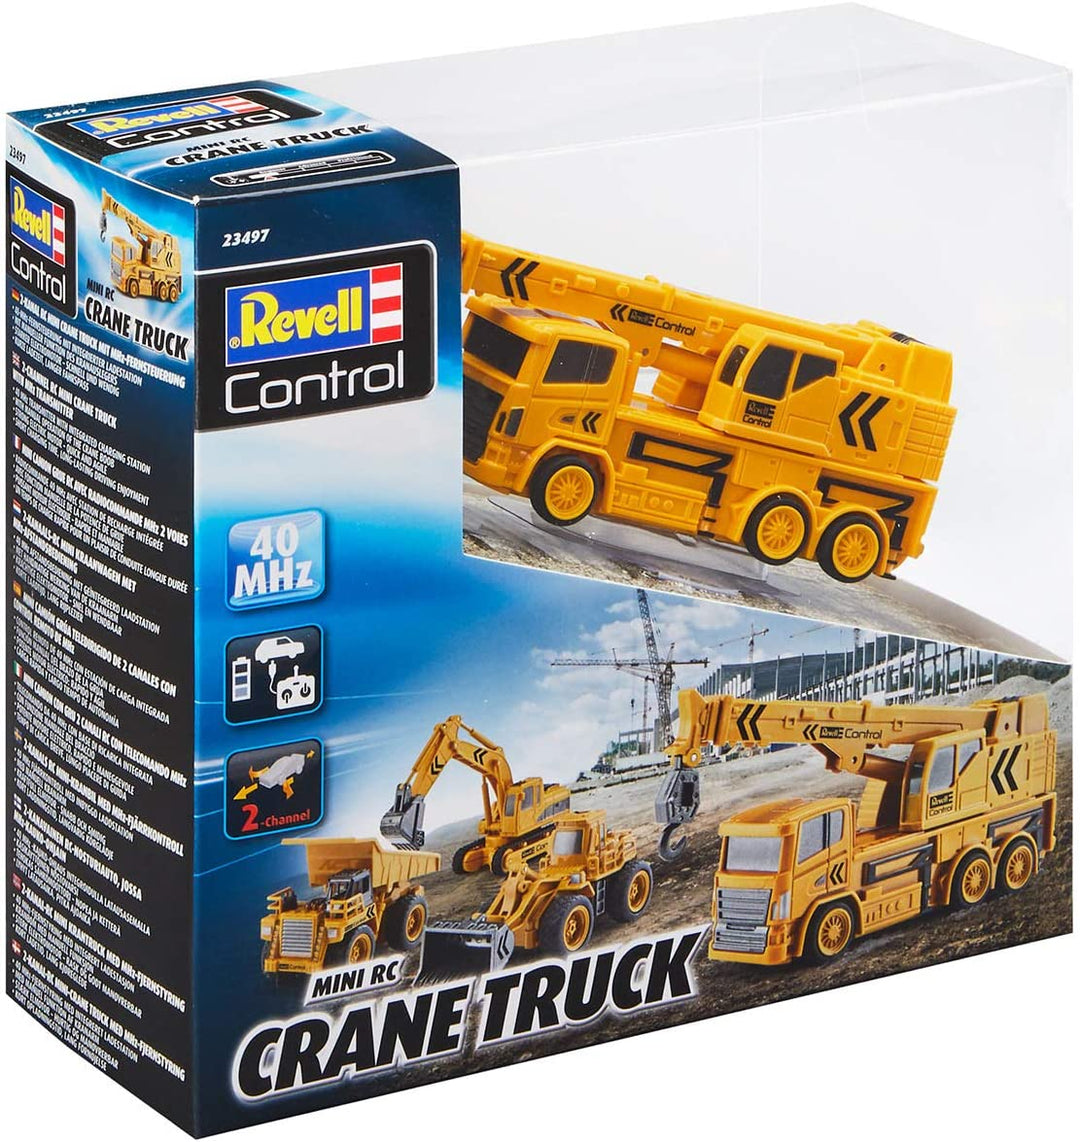 Revell Control 23497 Mini RC Crane Truck Plastic Model Kit, Yellow